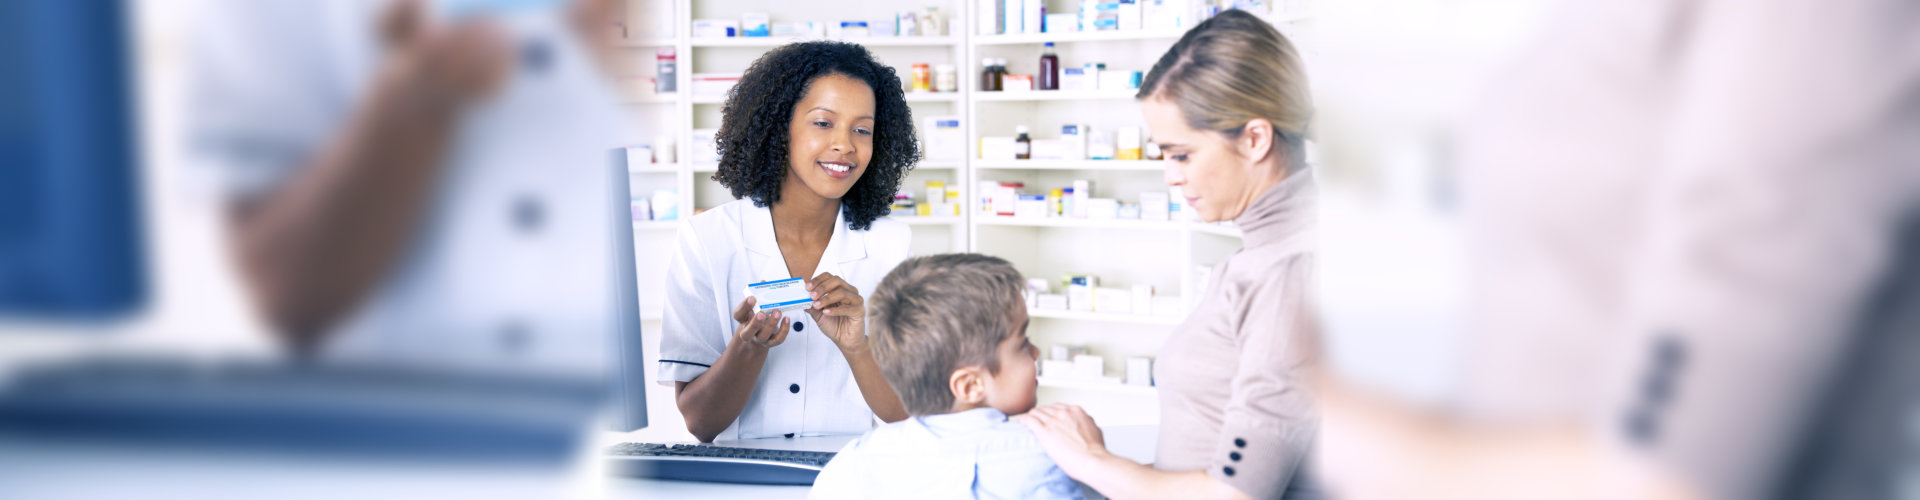 pharmacist entertaining customer with child